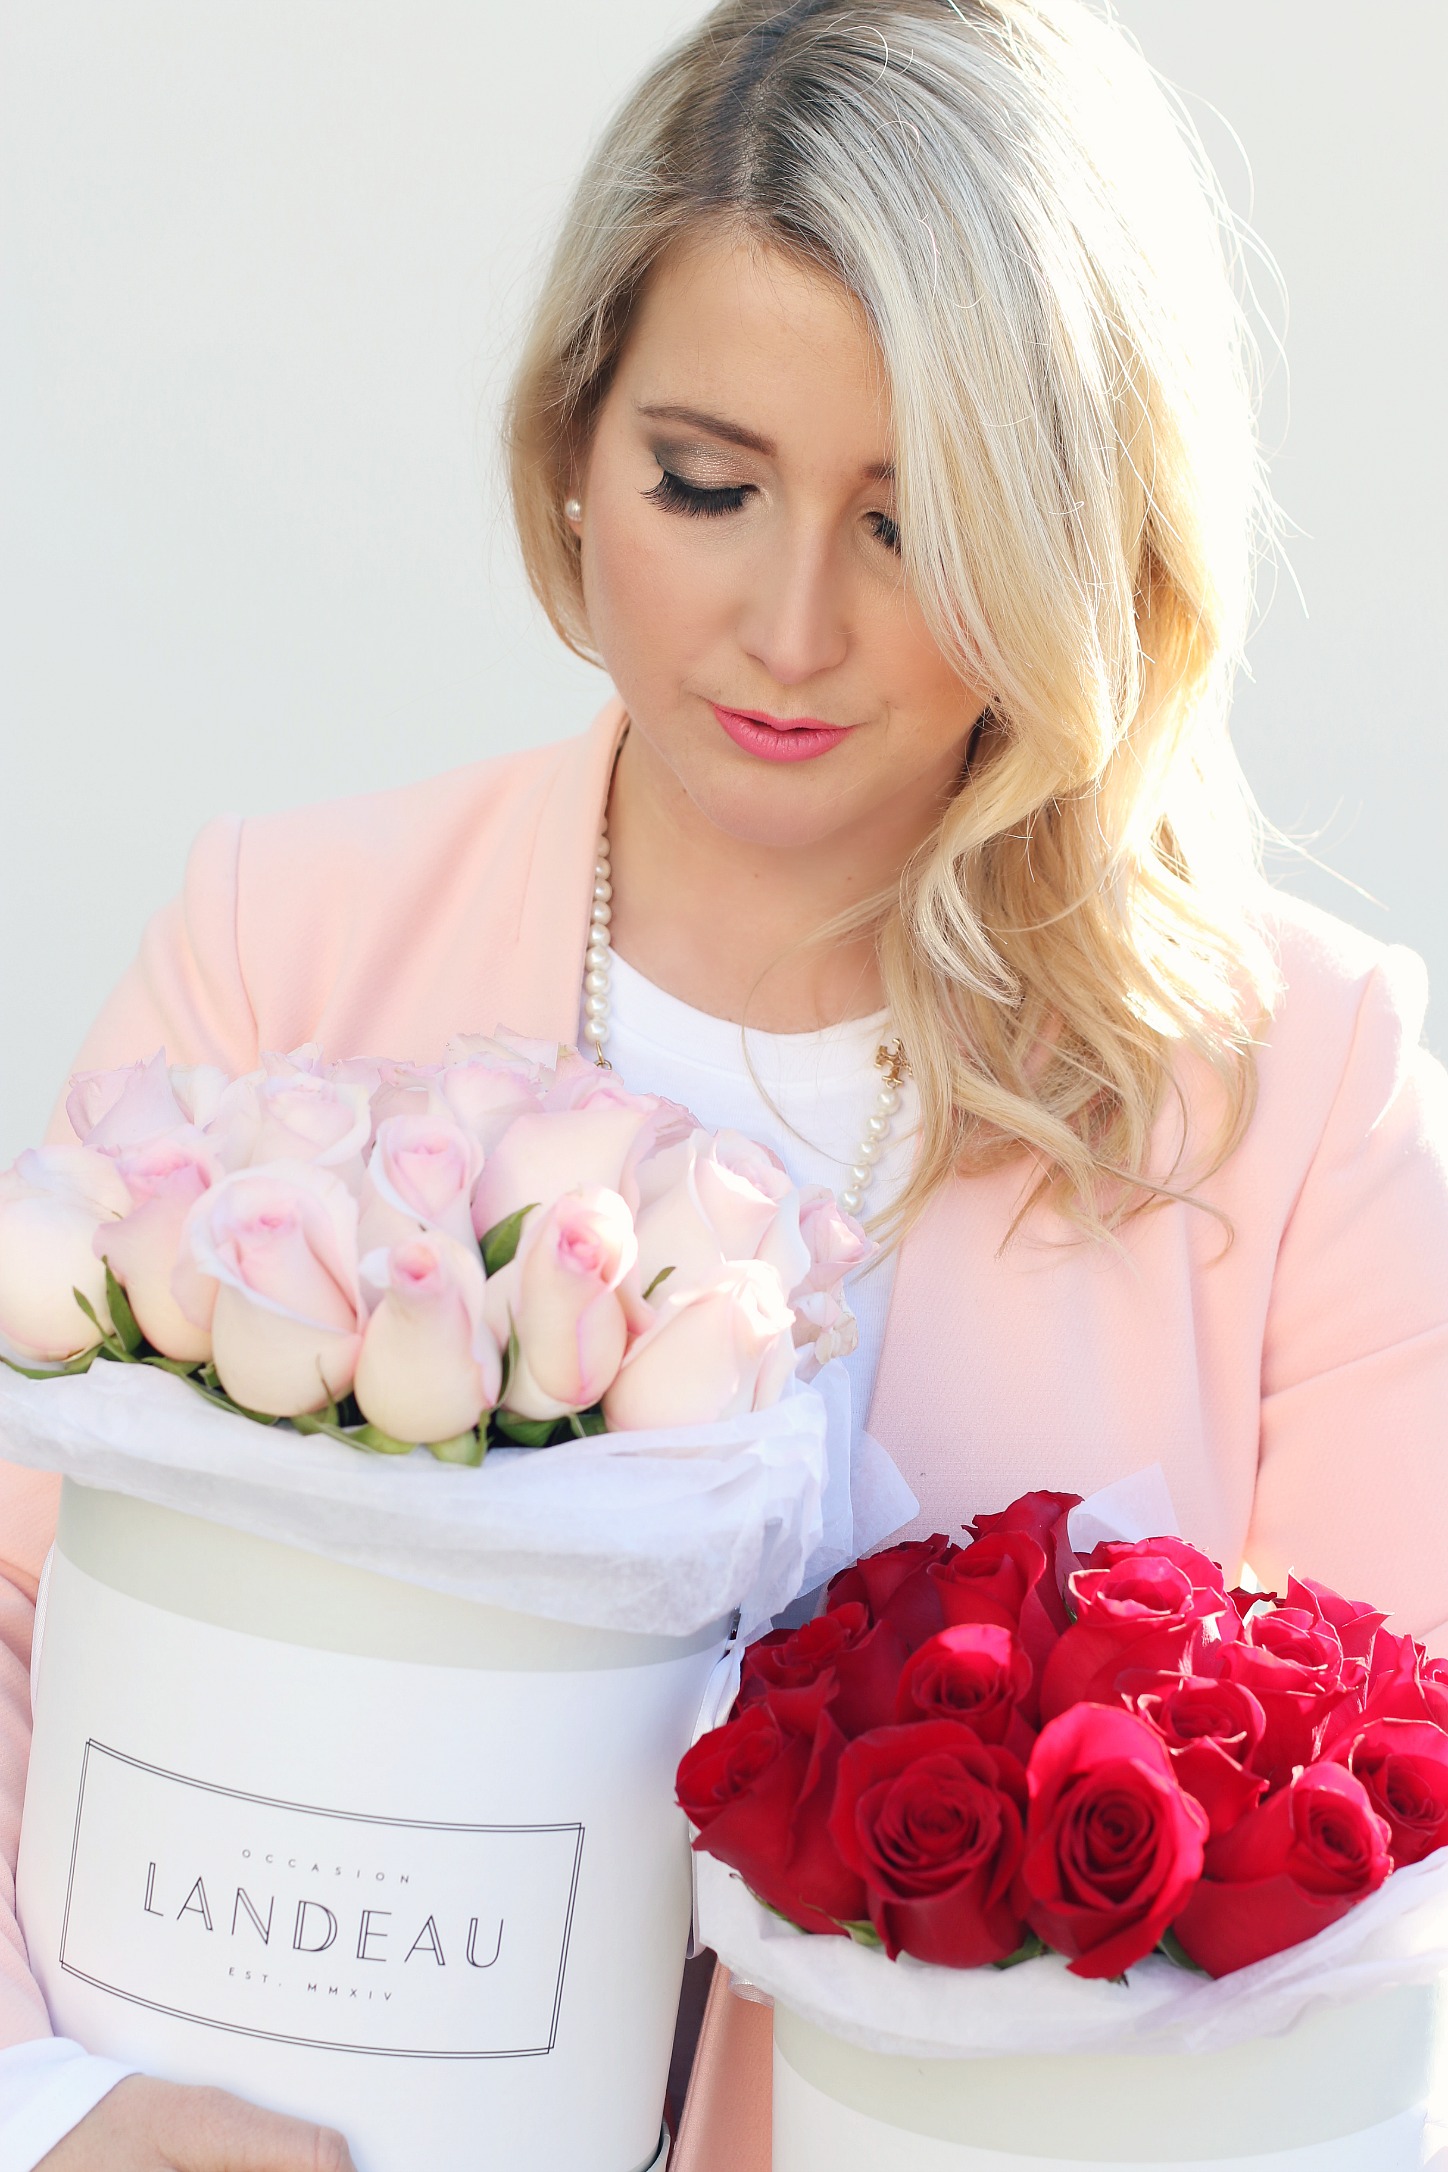 Valentines Day Give Landeau Roses Monika HIbbs